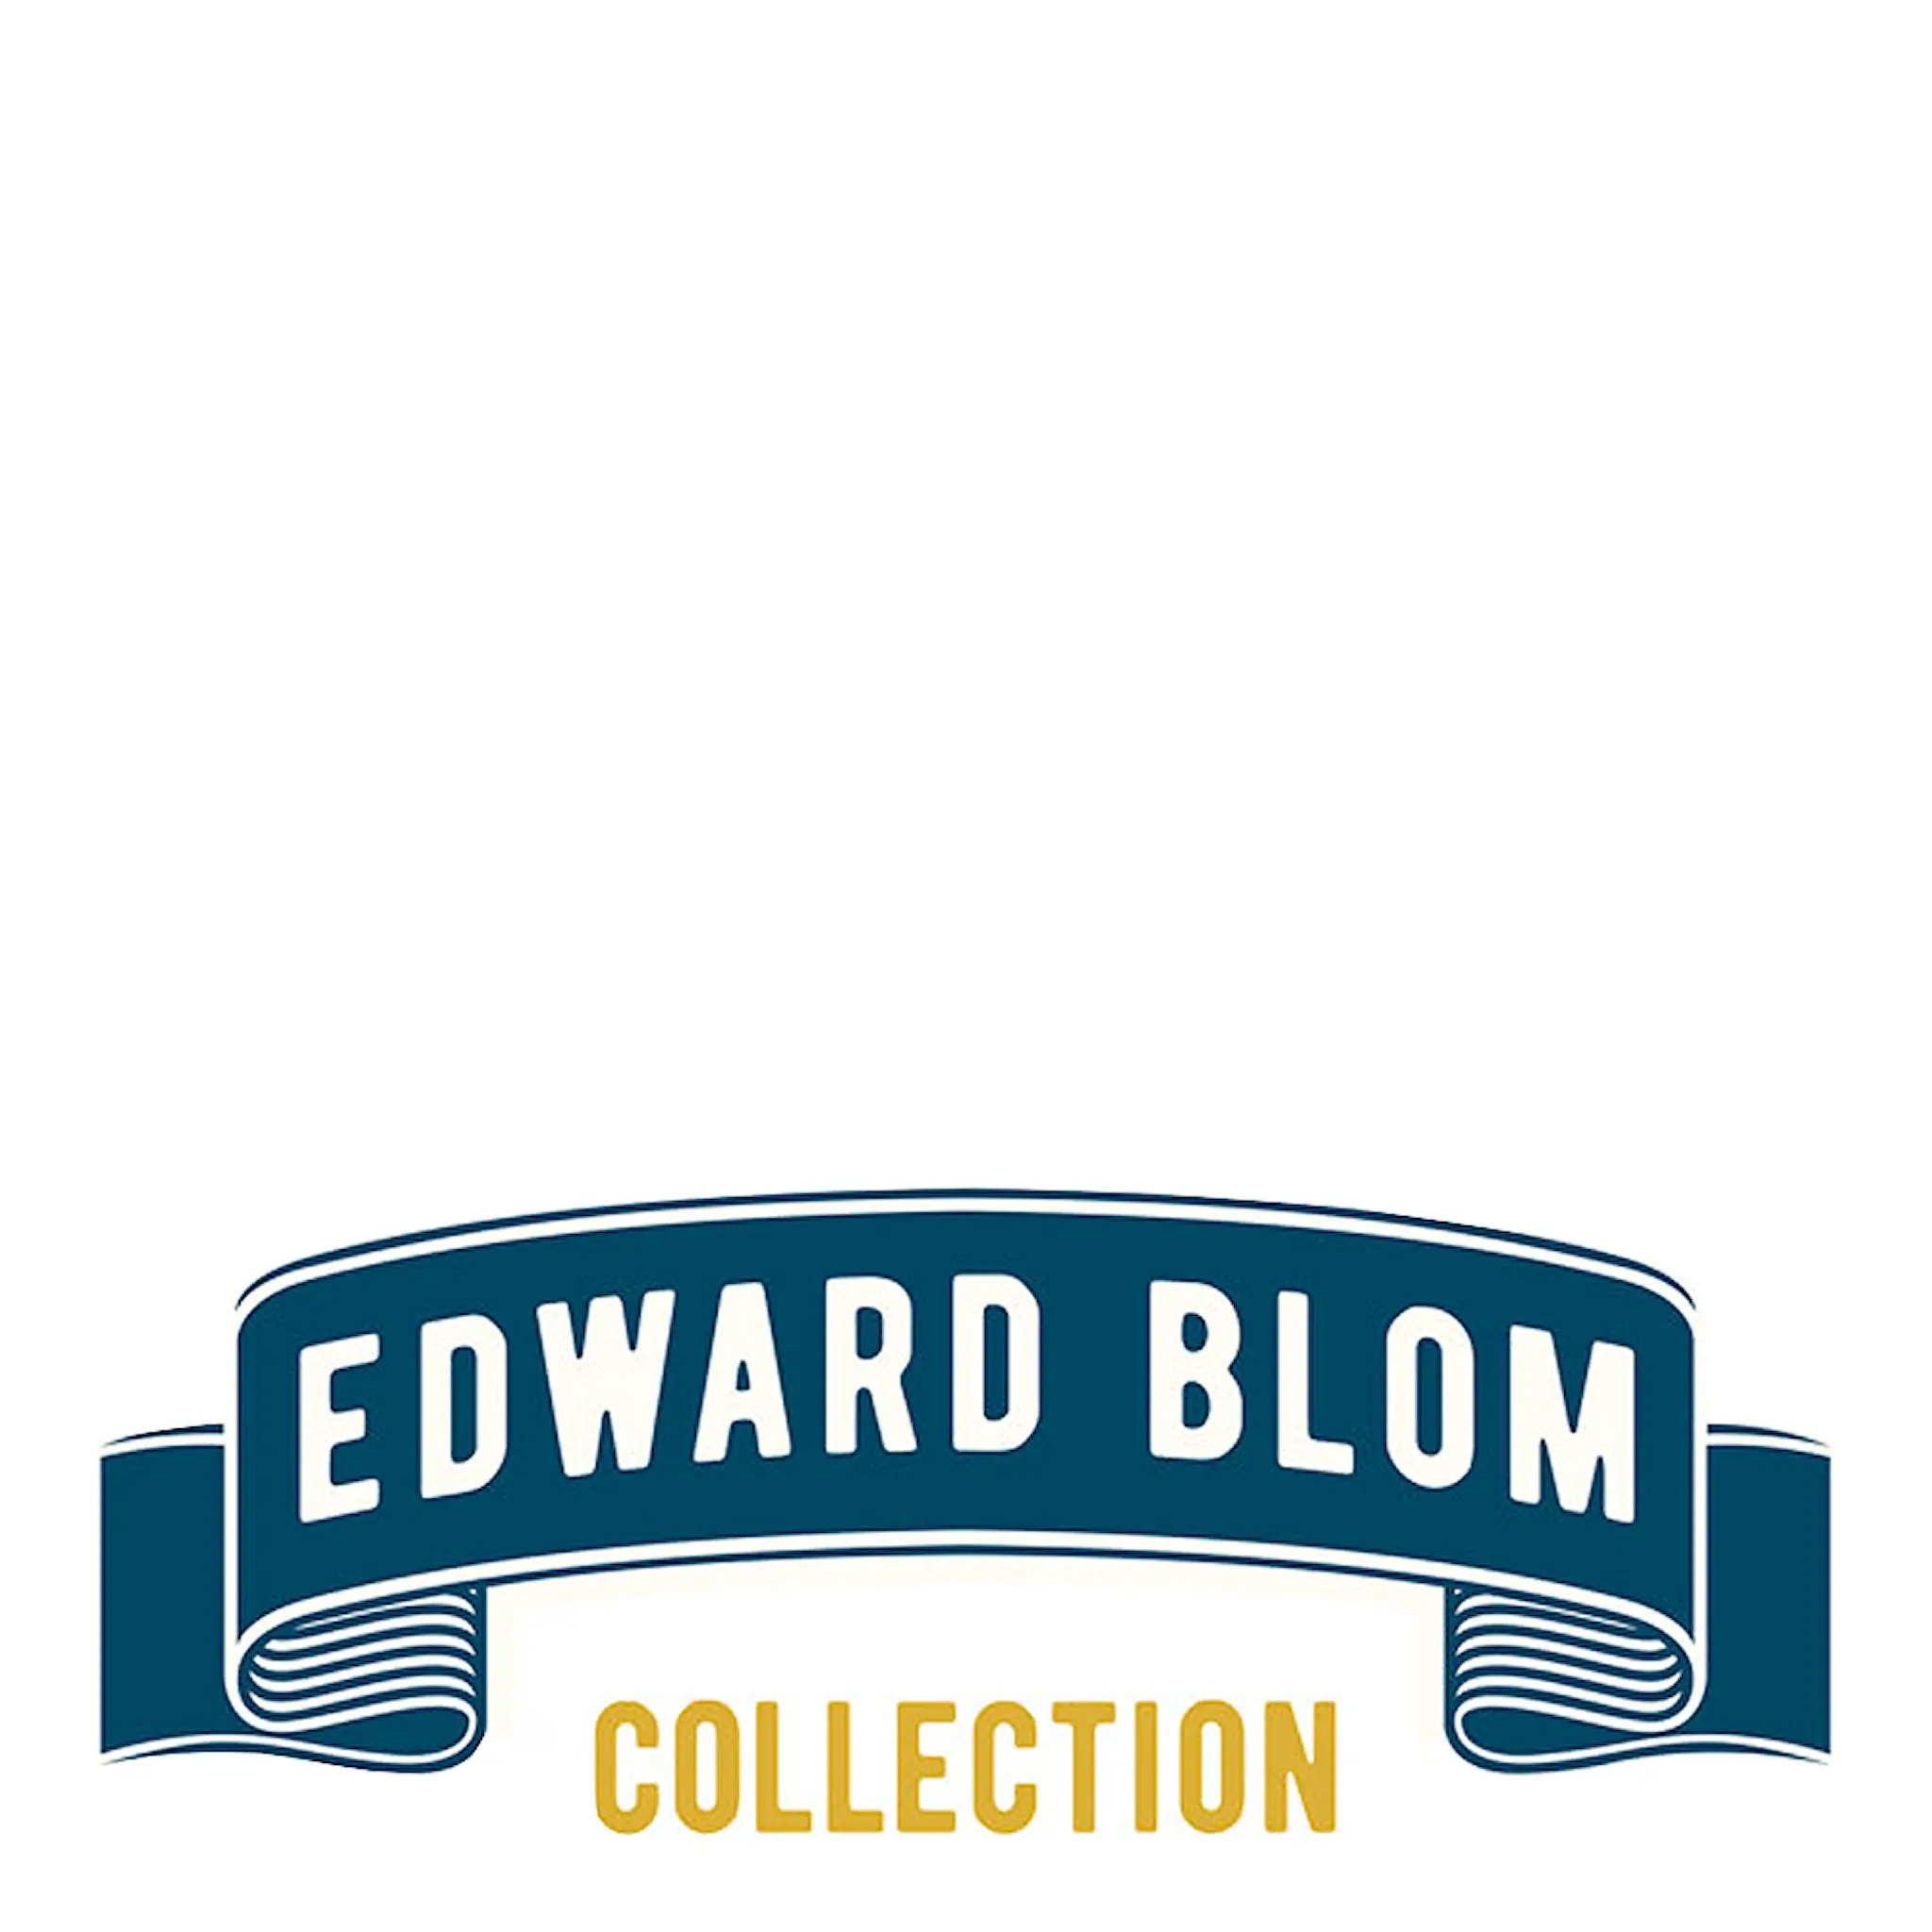 Edward Blom Collection Olutlasi Nro. 4